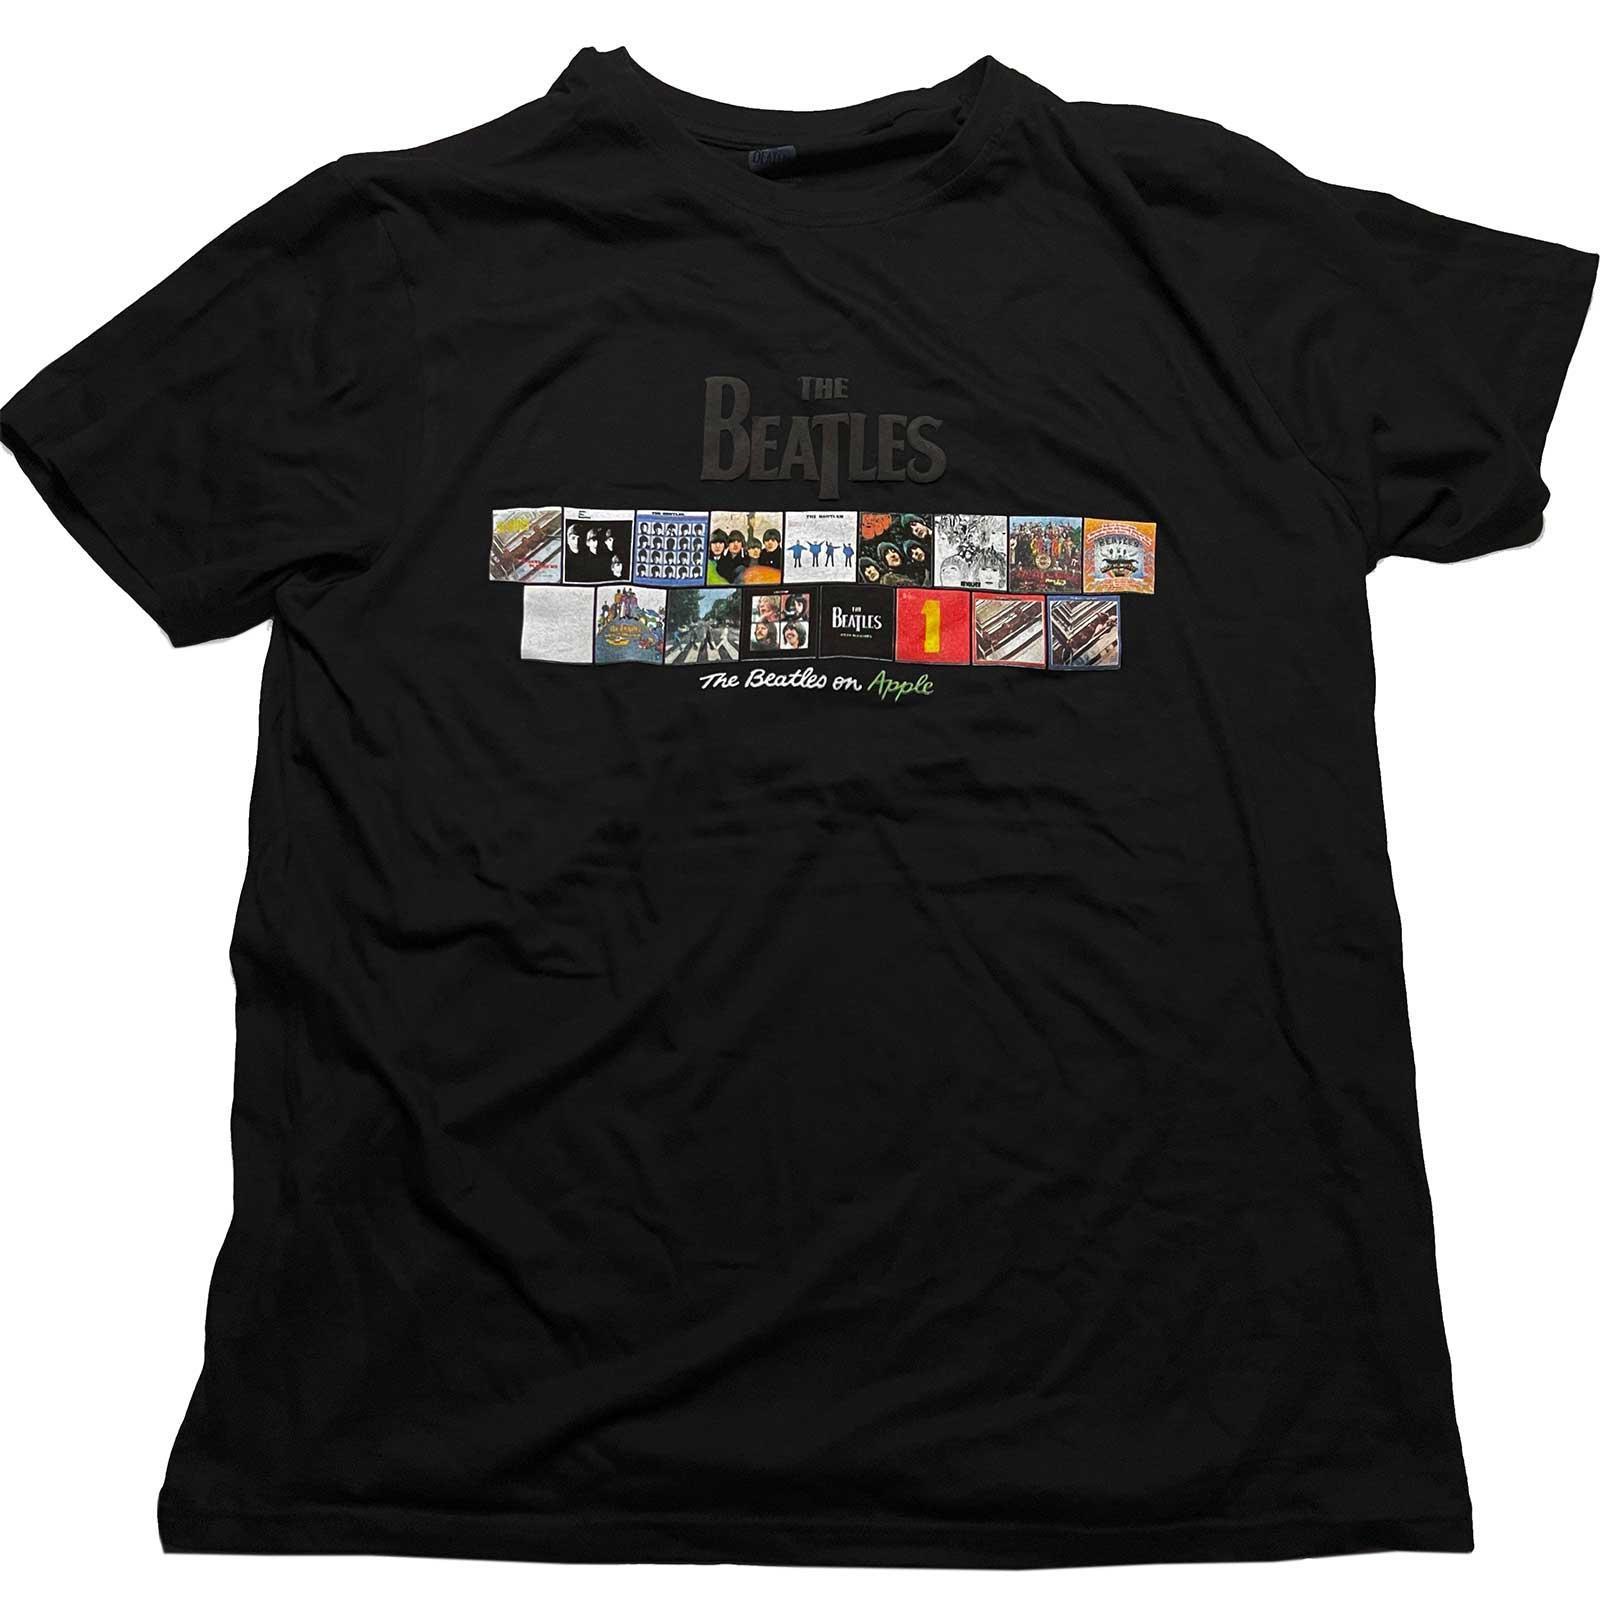 The Beatles Unisex Adult Albums on Apple Cotton T-Shirt (Black) (S)